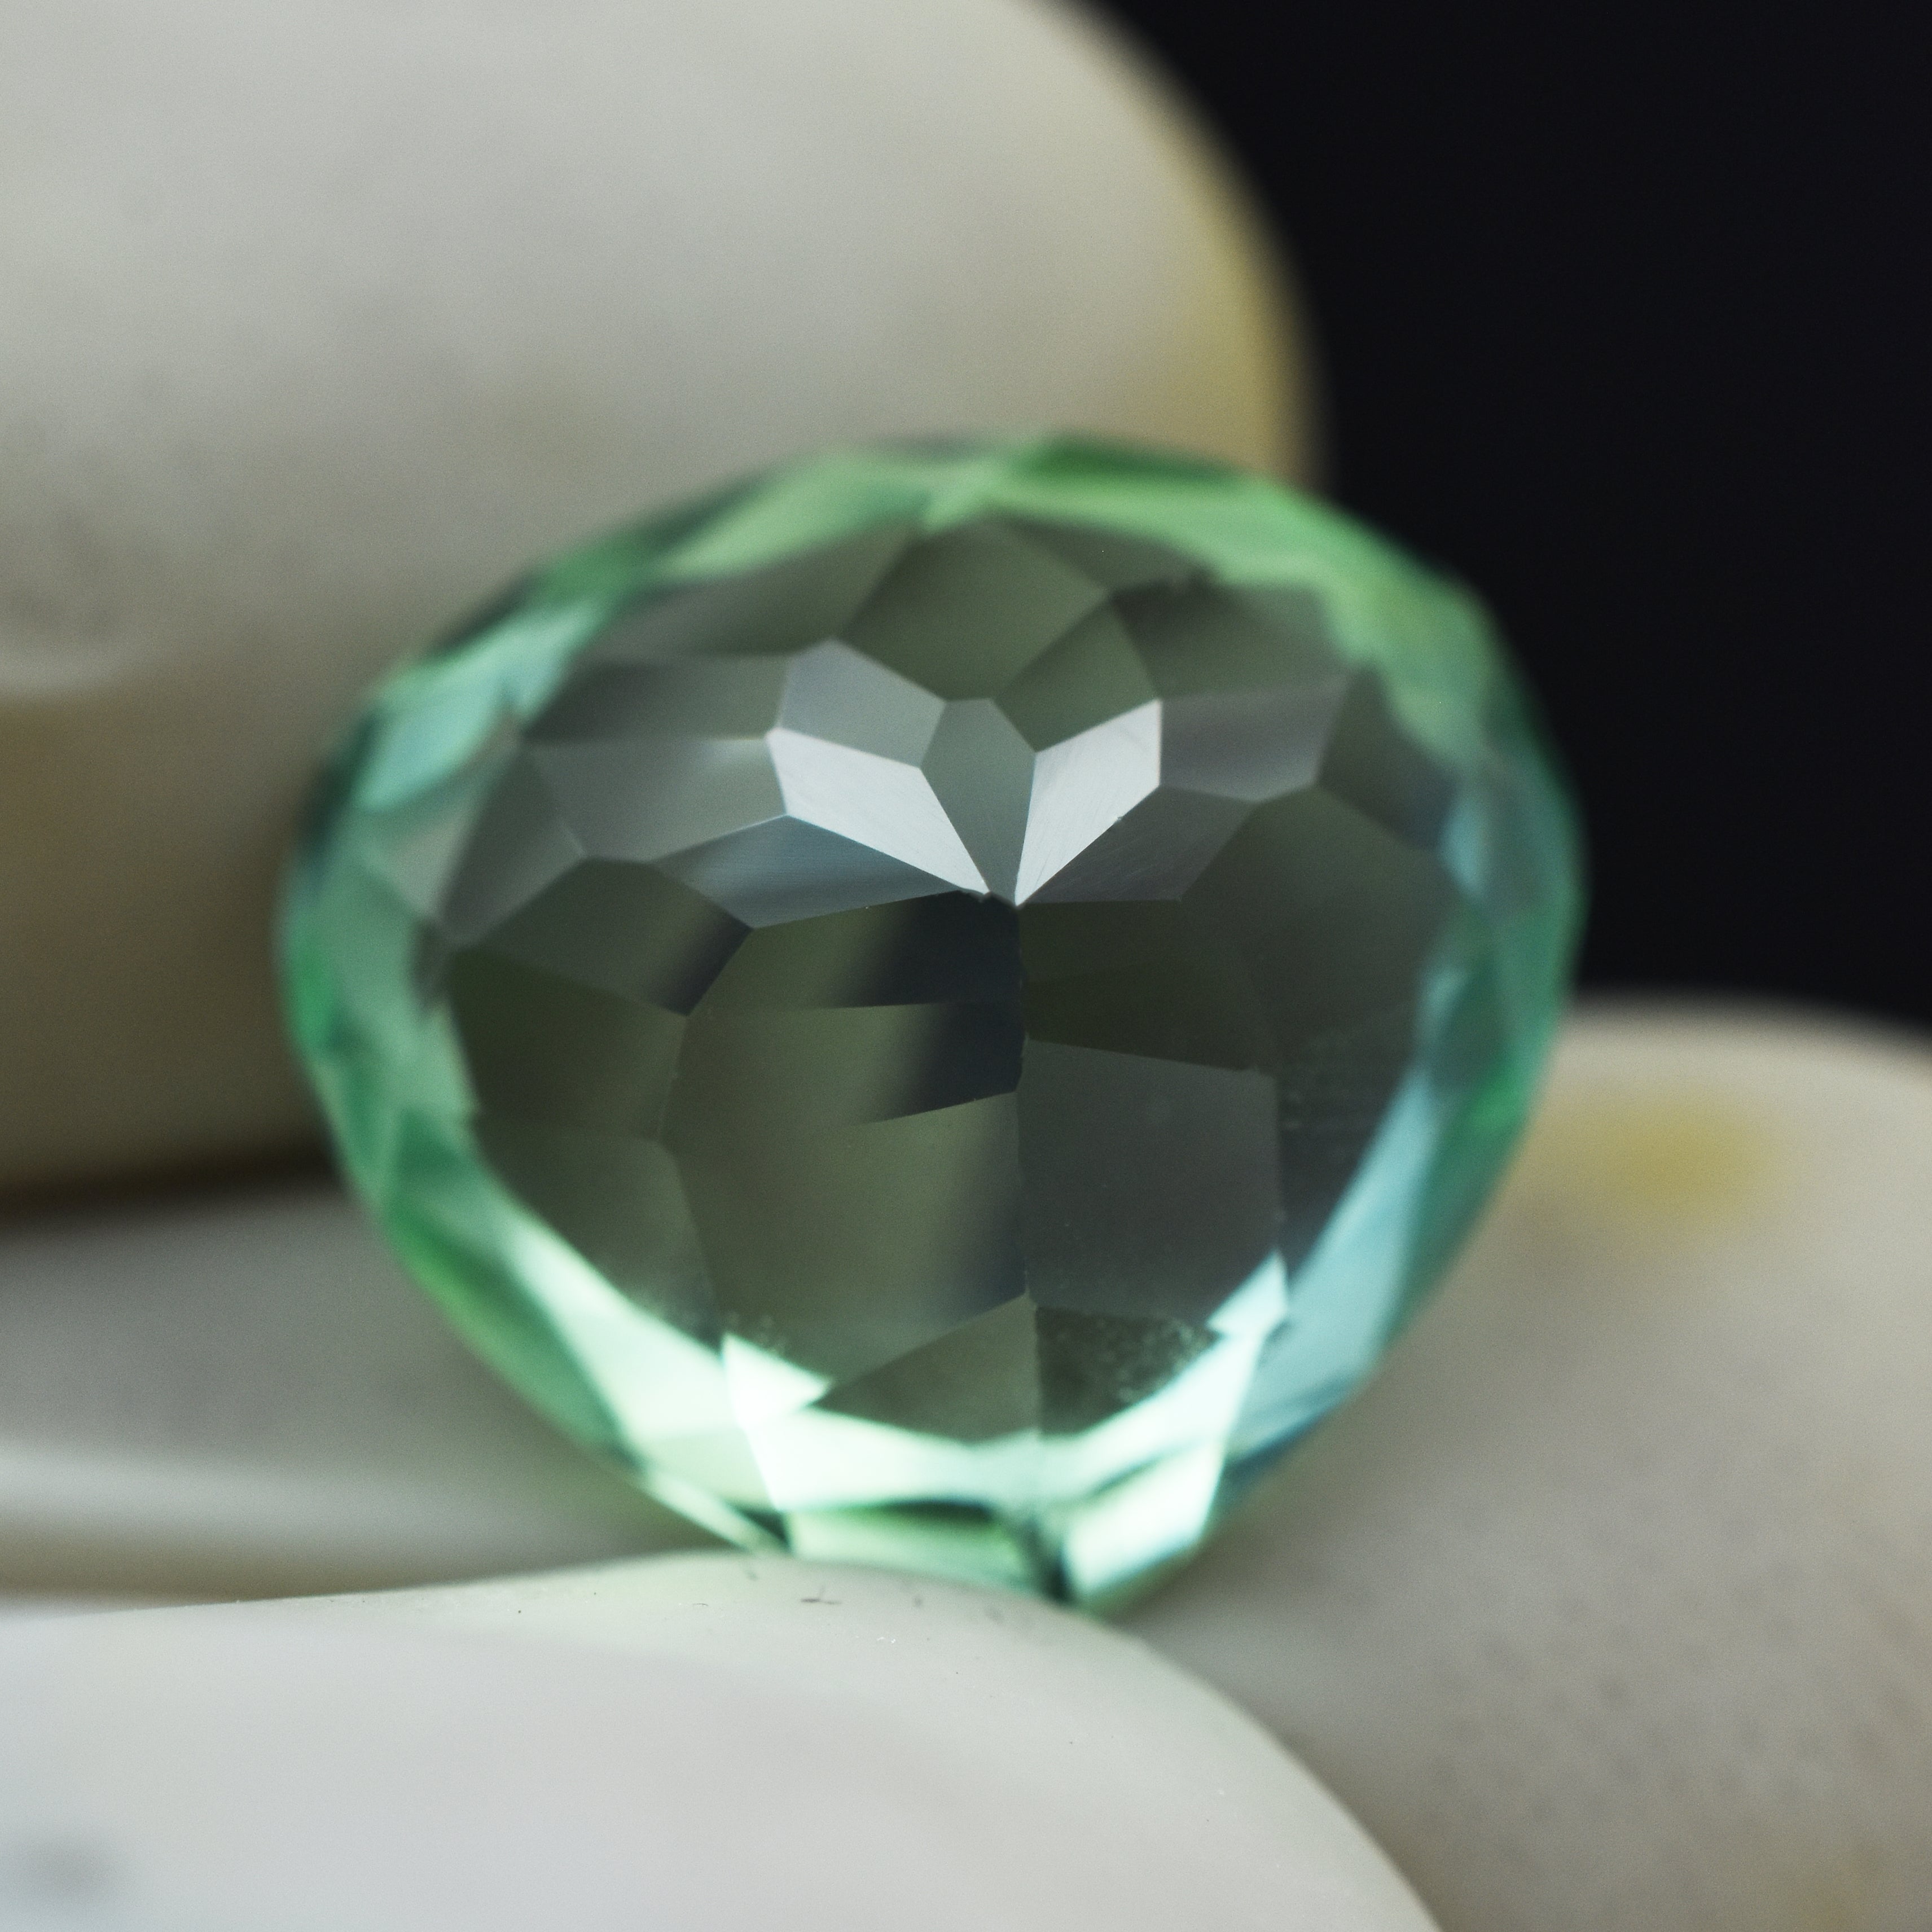 Sri-Lanka Sapphire Natural 6.35 Carat Pear Cut Bluish Green Sapphire Certified Natural Loose Gemstone Ring Size Gem Free Shipping